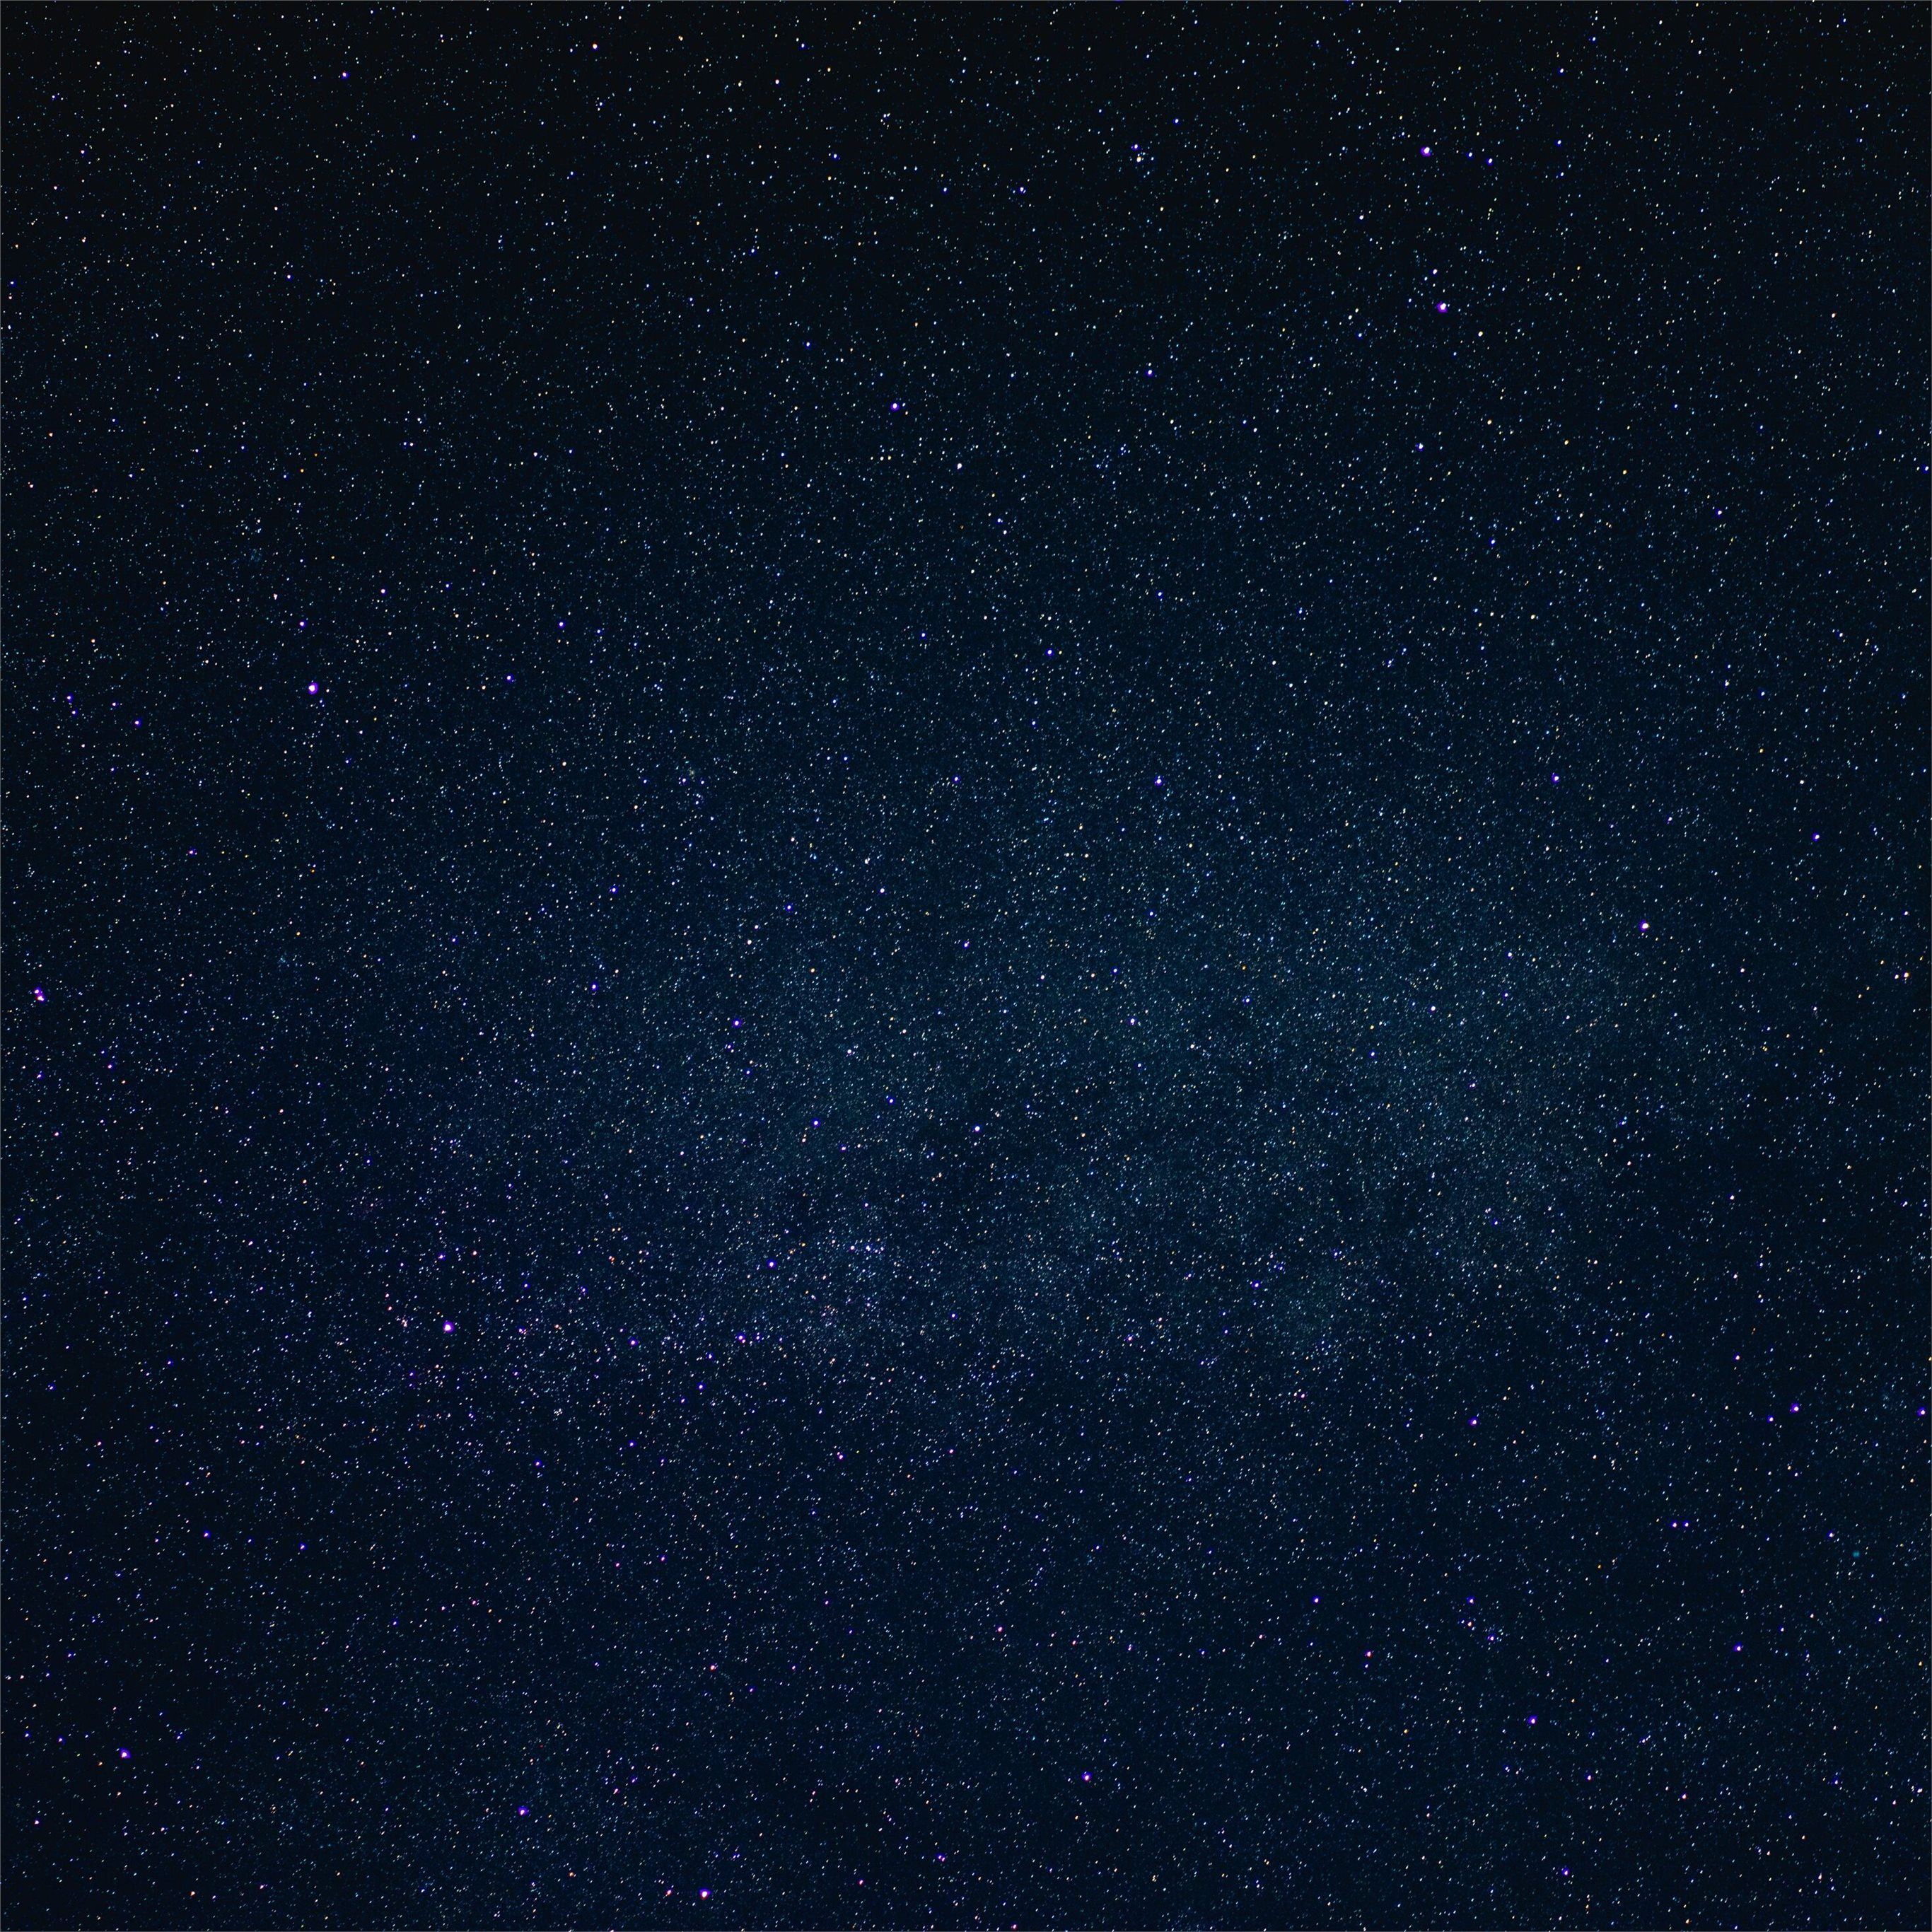 Sky Full Of Stars 5k iPad Pro Wallpaper